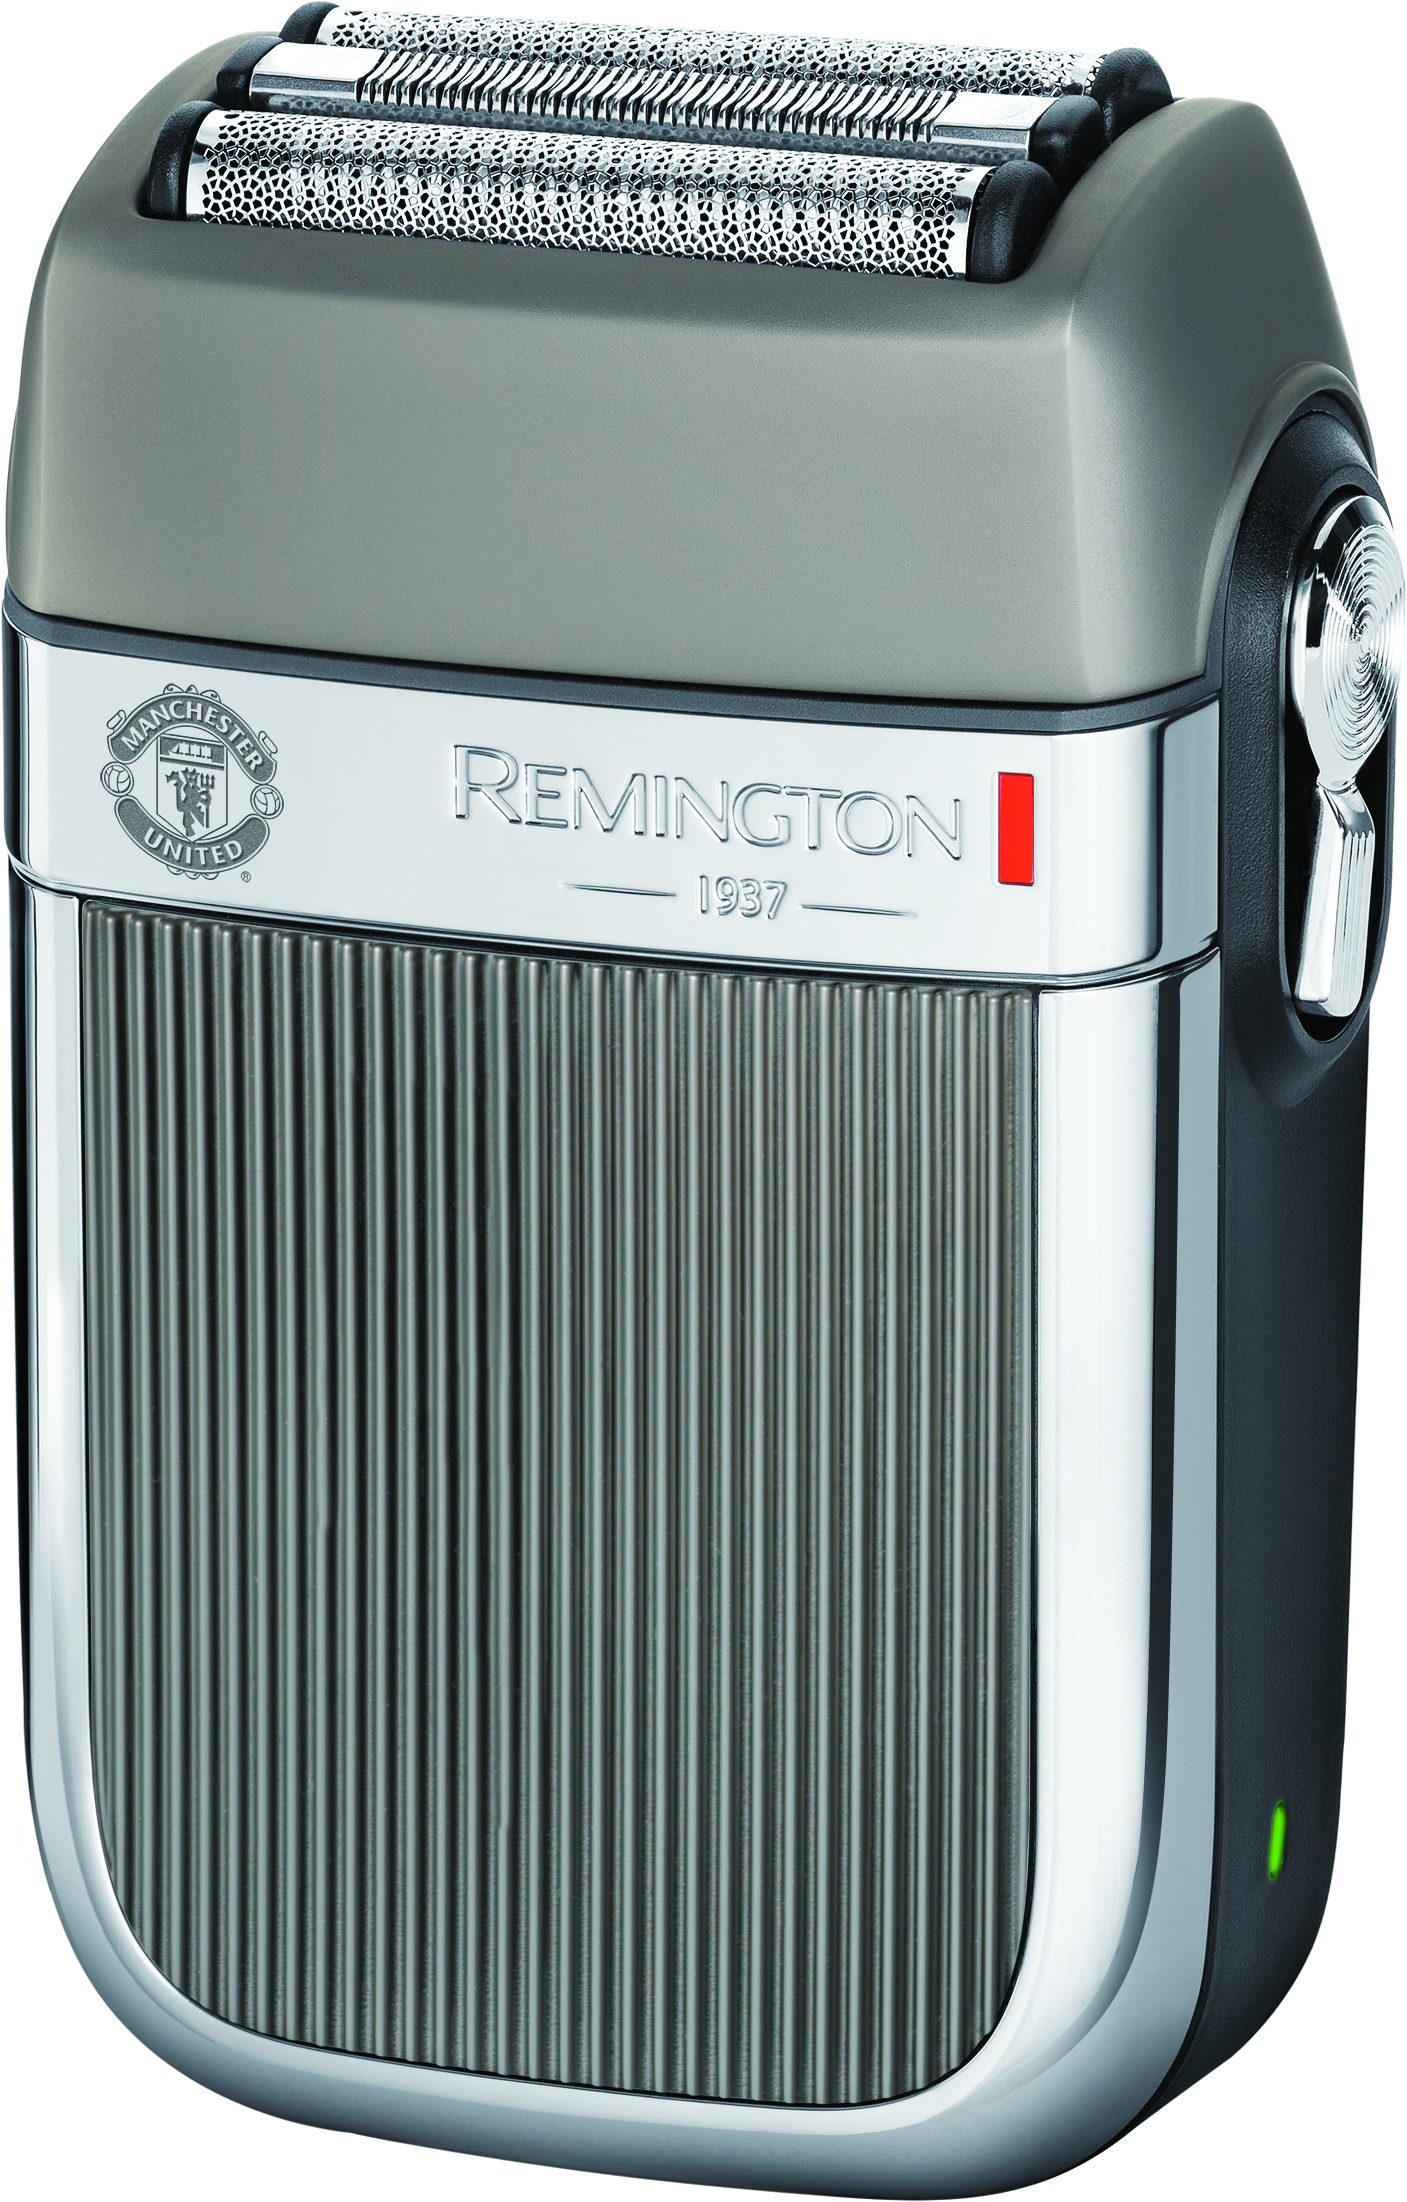 Remington Manchester United Edition HF9050 Heritage scheerapparaat